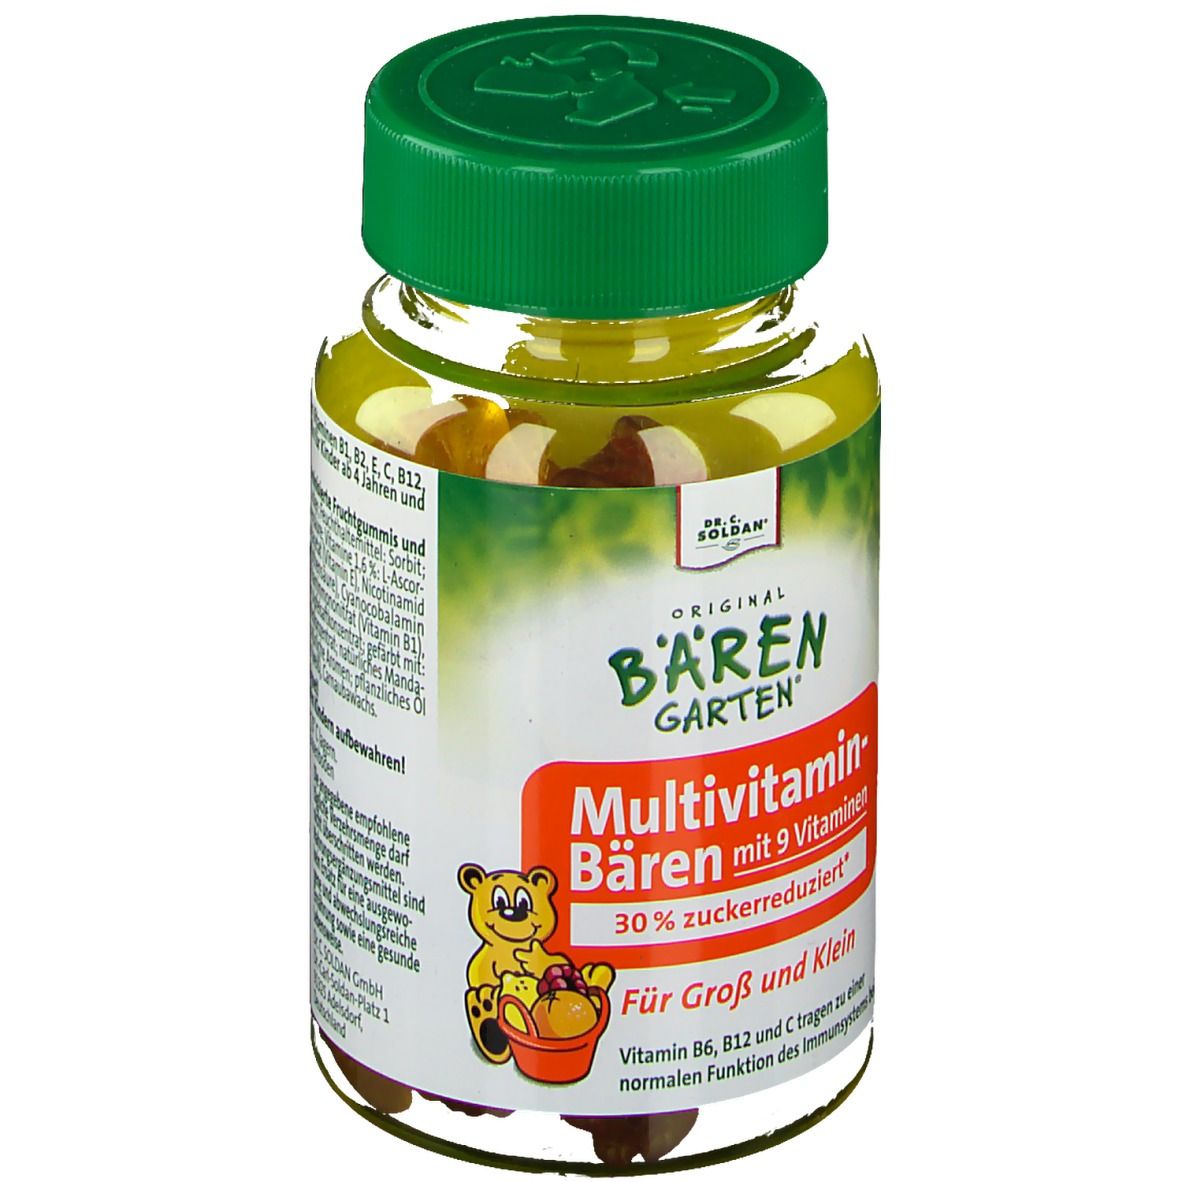 Original Bärengarten® Multivitamin-Bären zuckerreduziert